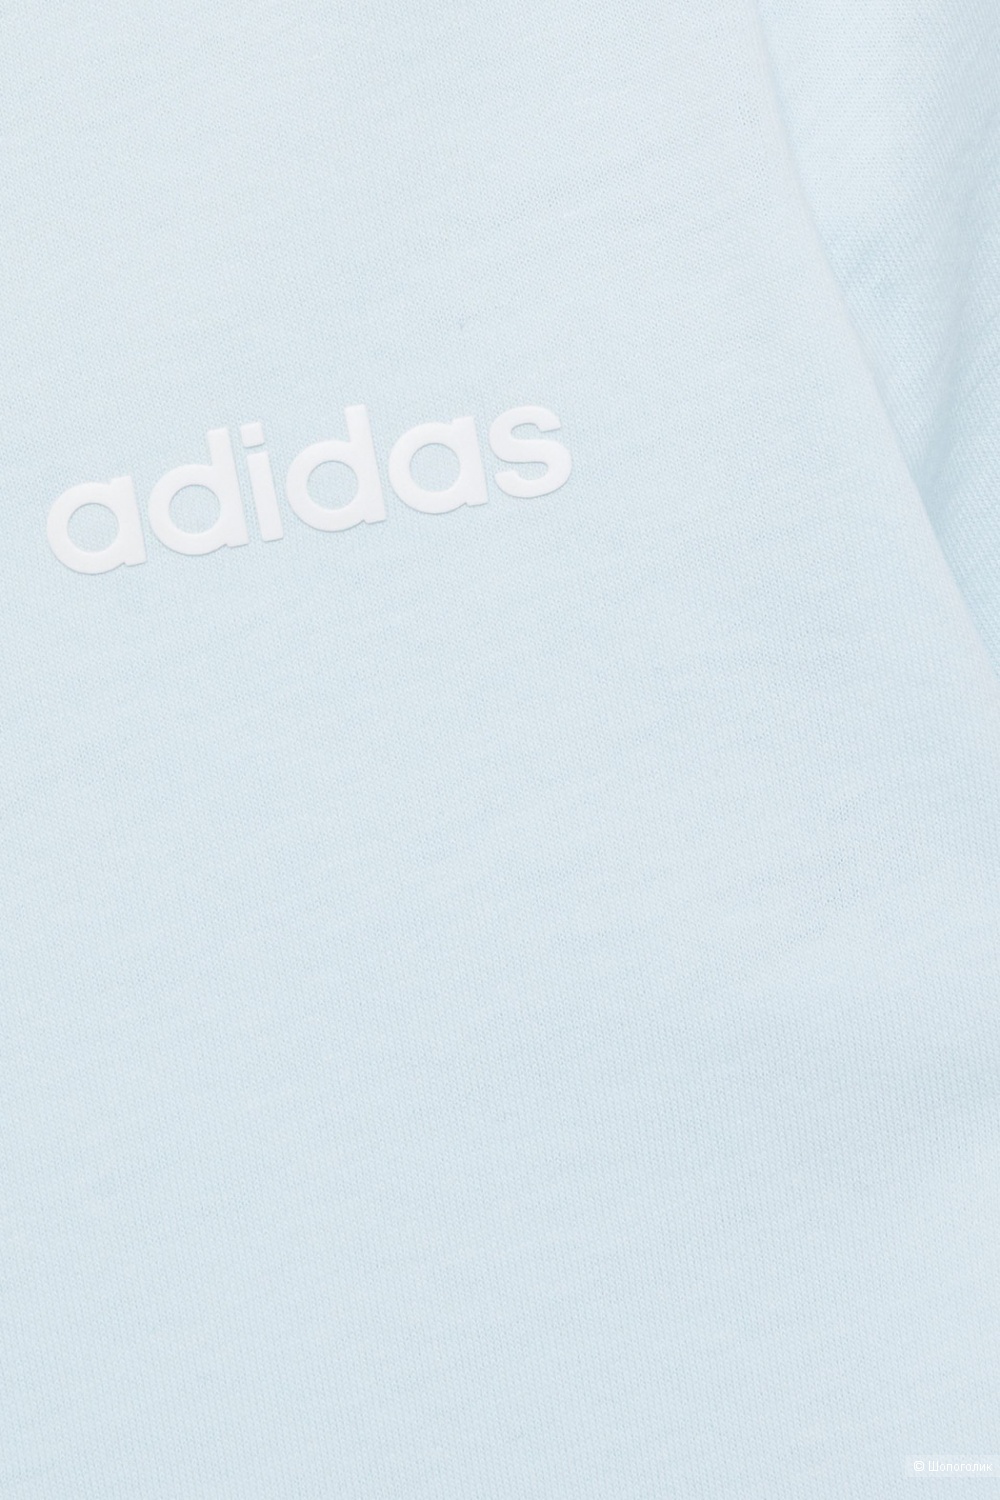 Голубая футболка Adidas, размер L